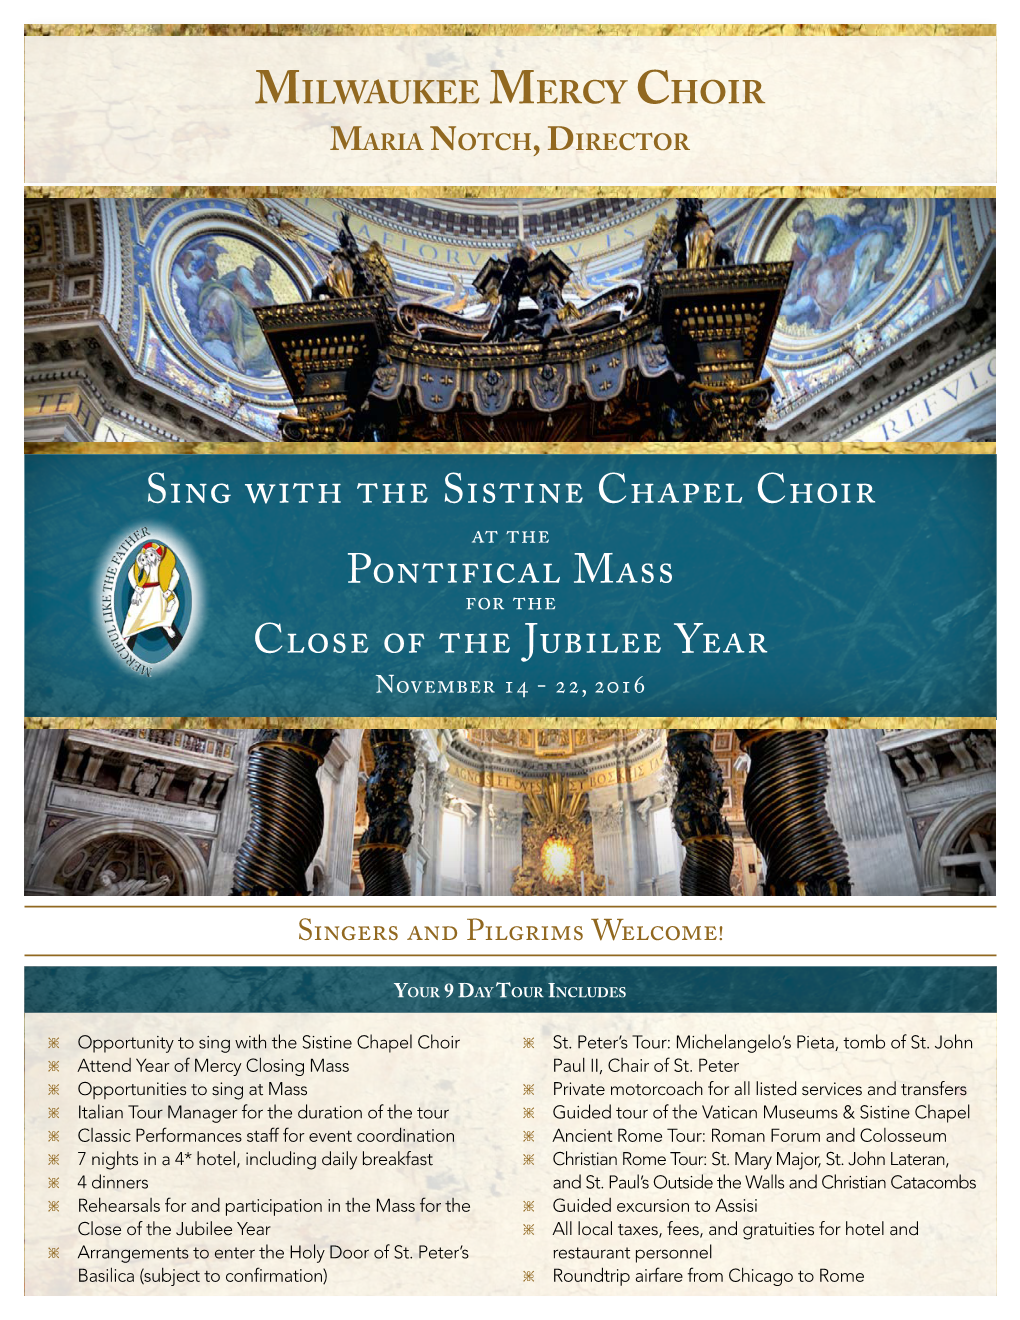 Jubilee Year Pontifical Mass Milwaukee Mercy Choir